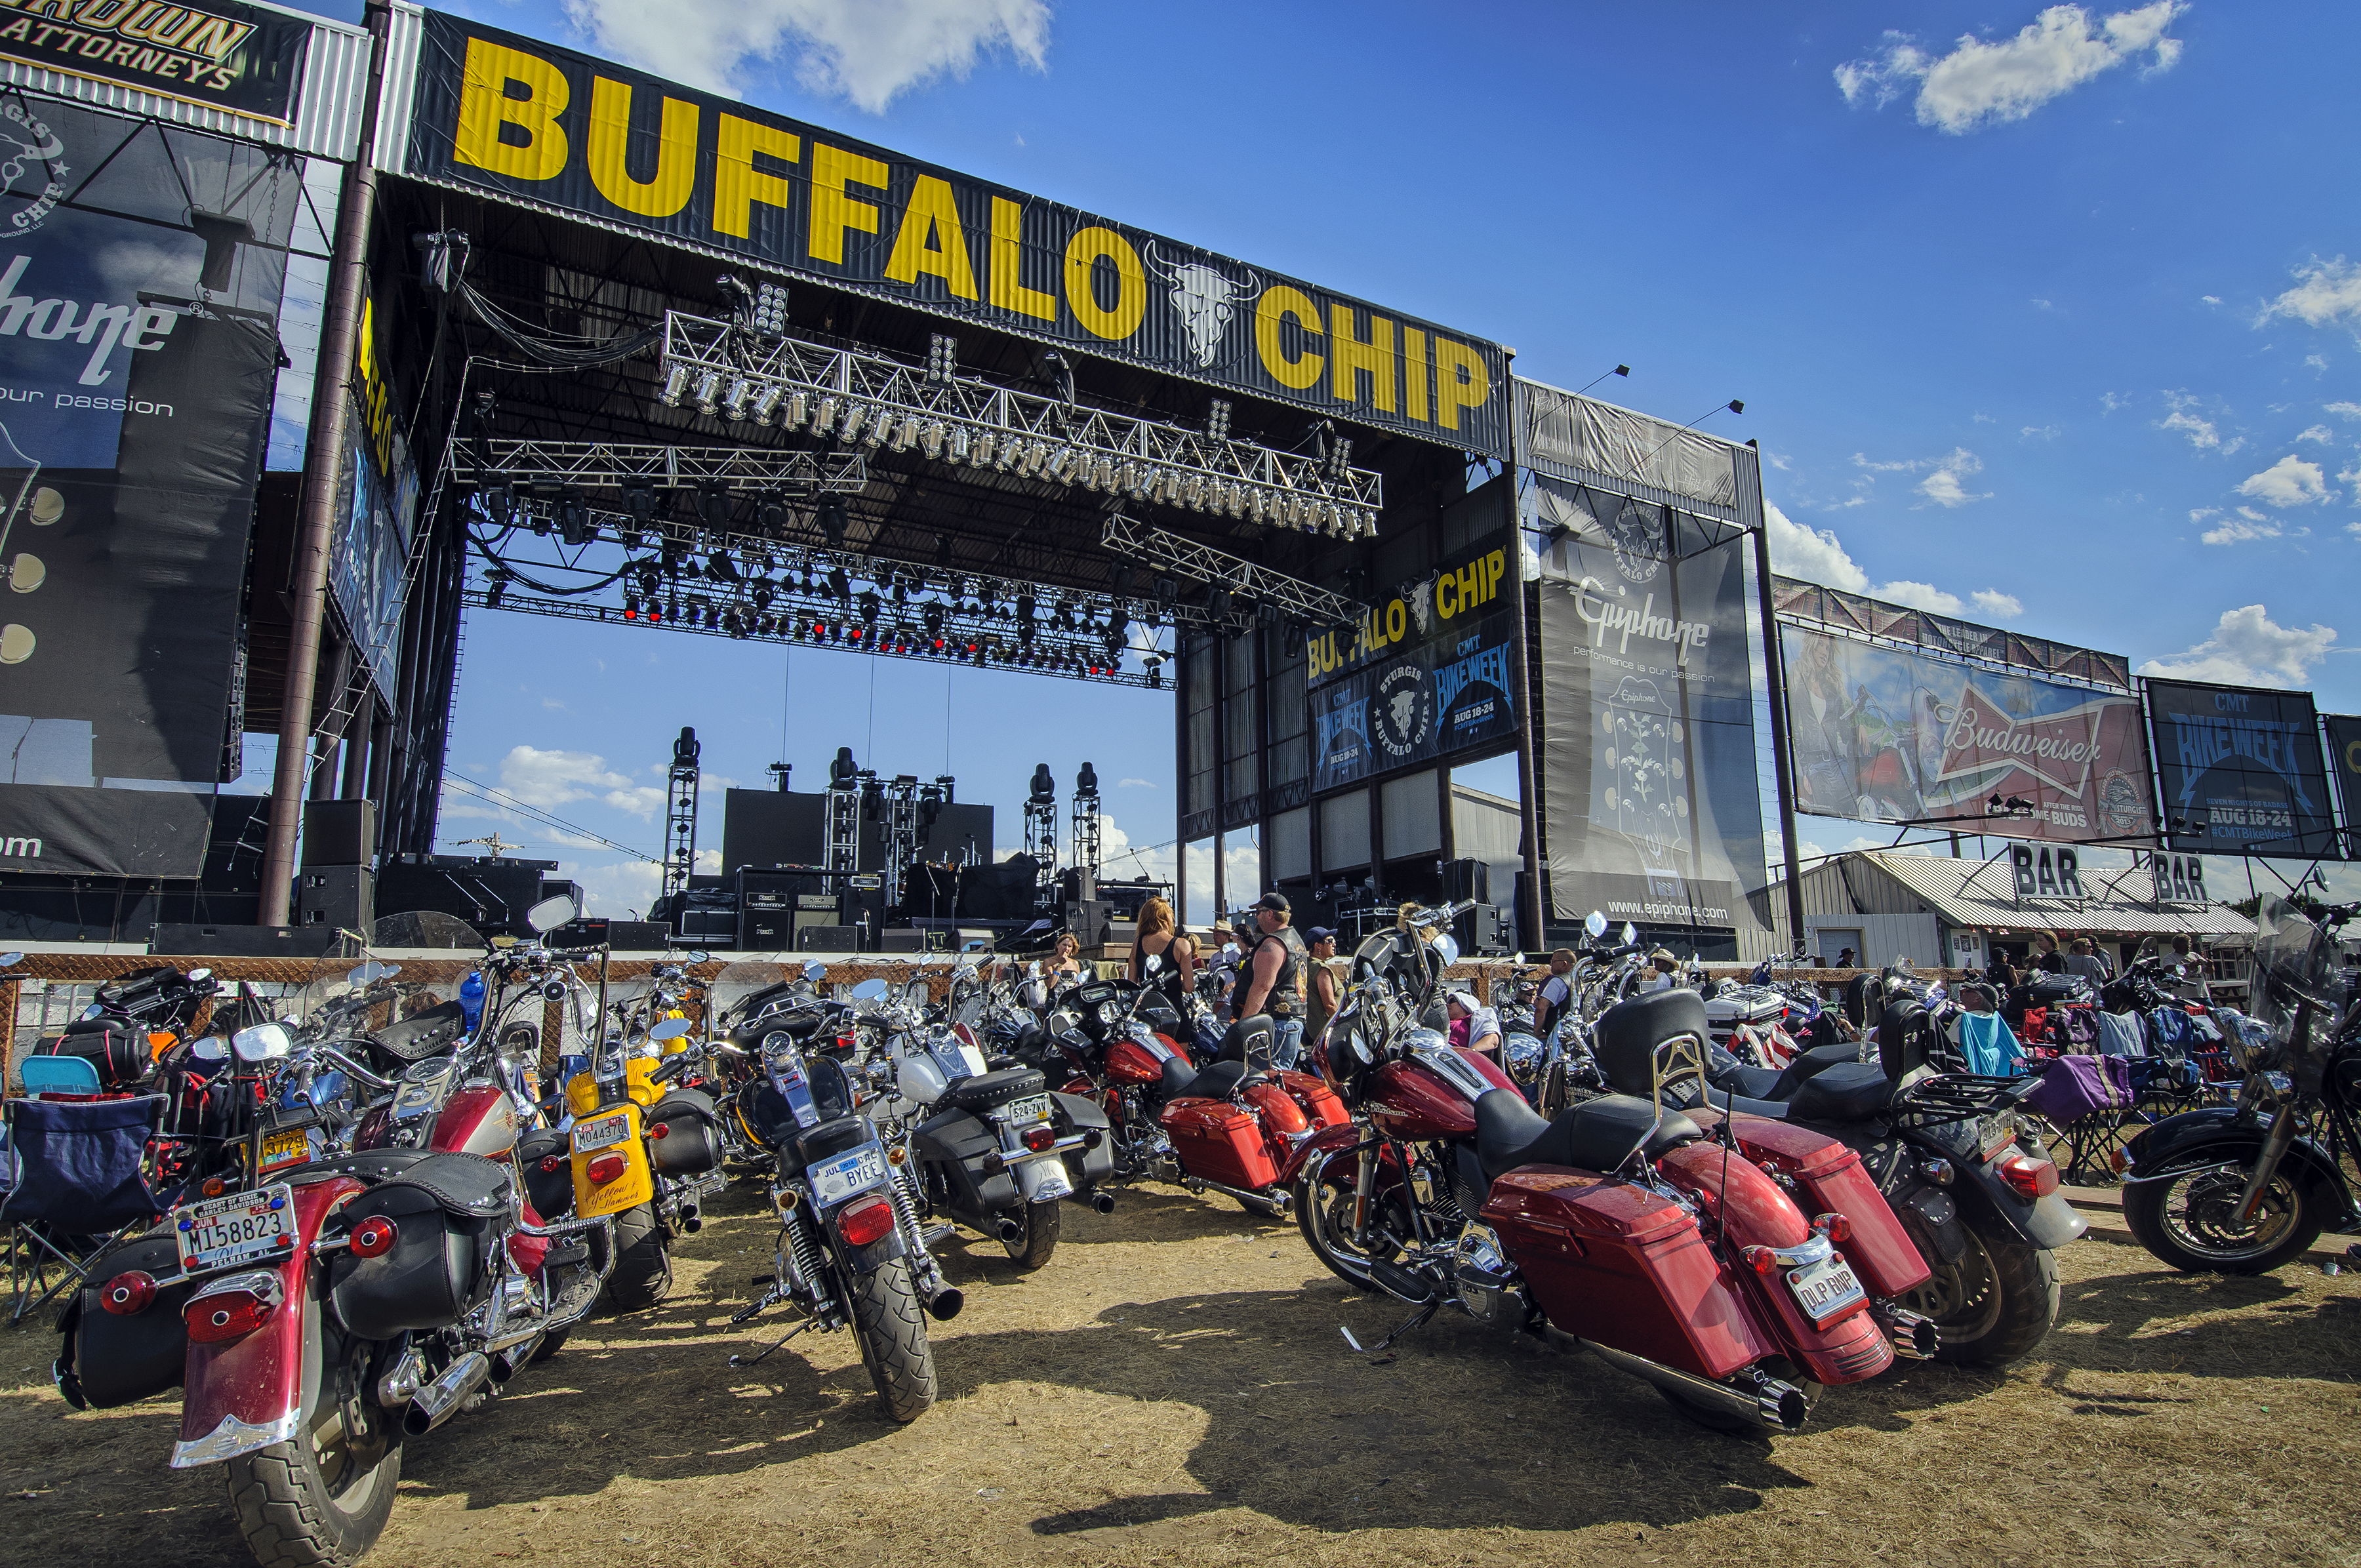 Buffalo Chip Concert Venue